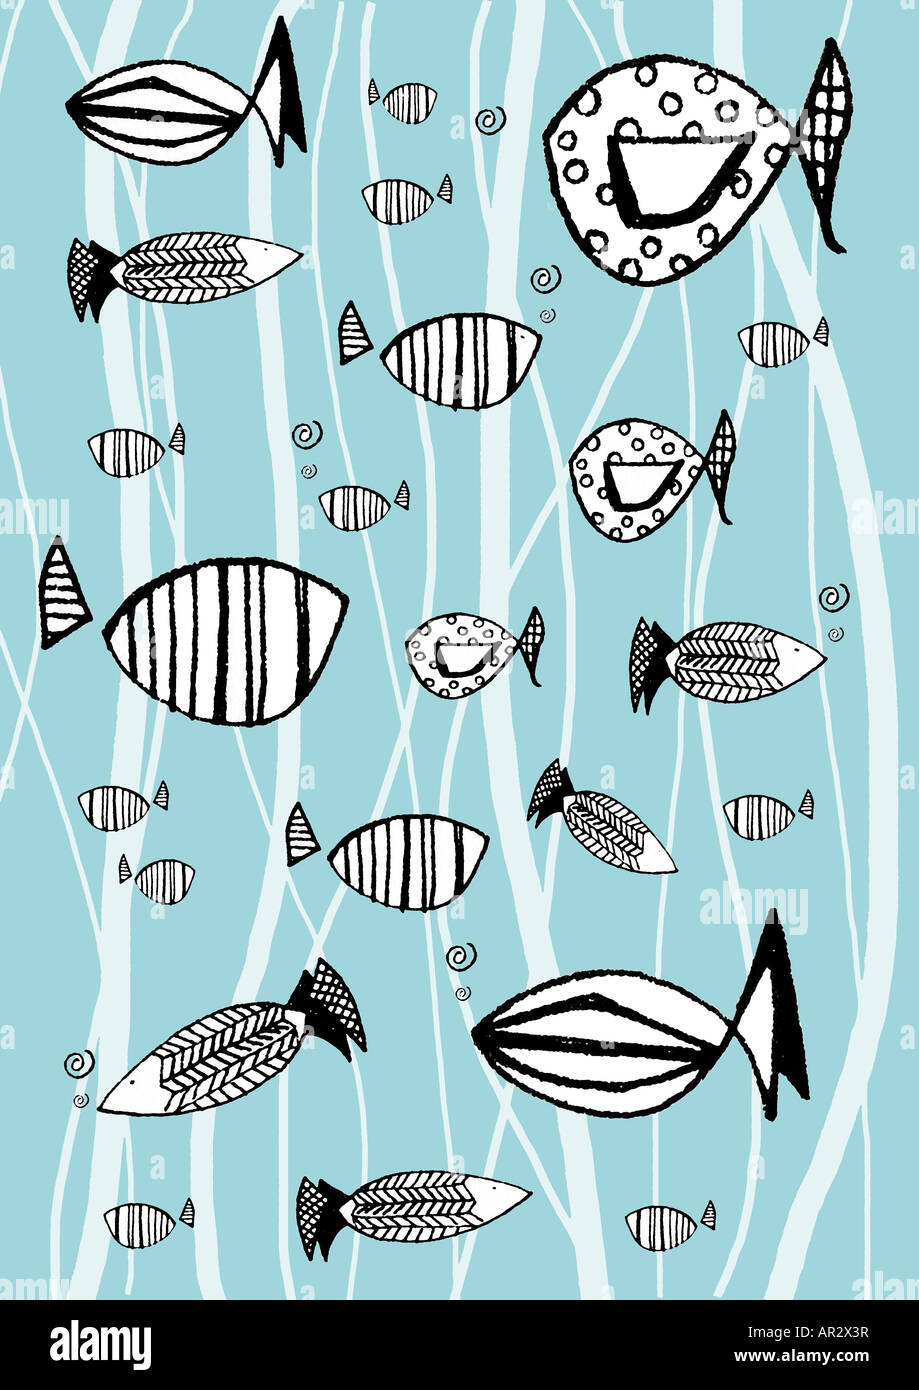 Retro style Illustration of fish Stock Photo